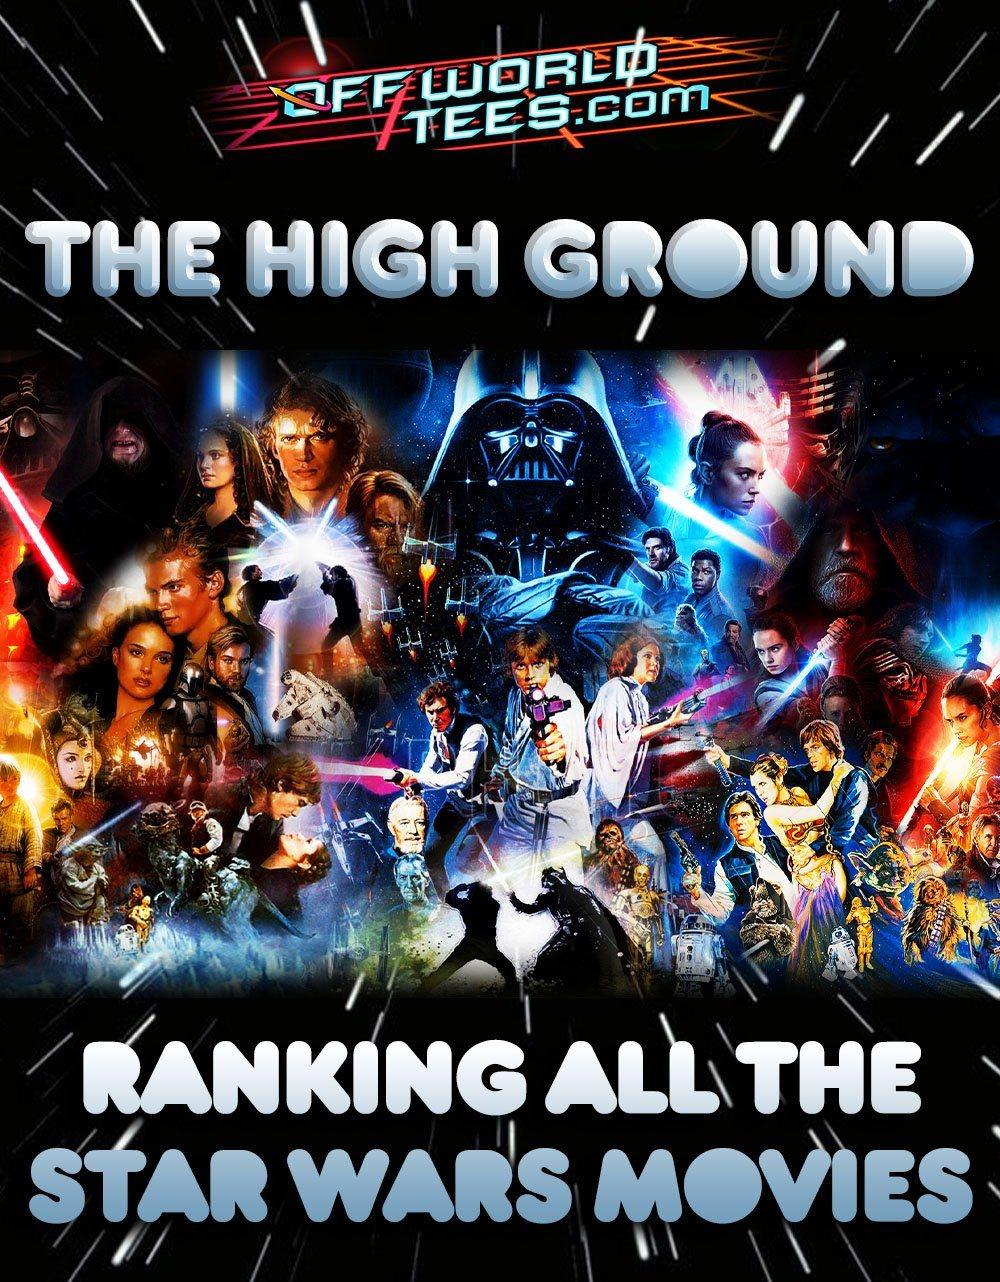 The High Ground - Which is the best Star Wars movie?